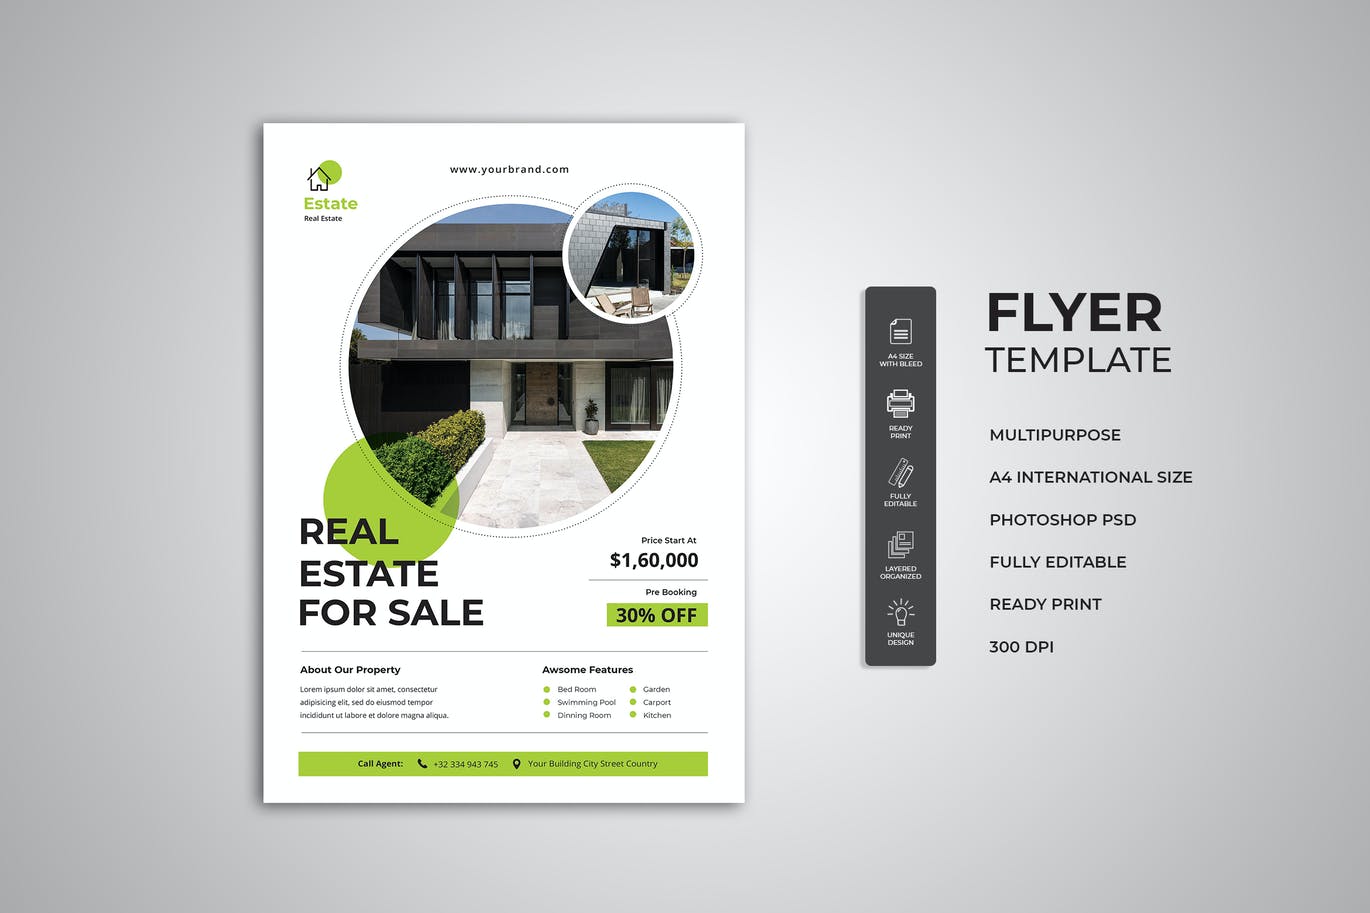 房地产促销宣传单设计素材 Real Estate Flyer